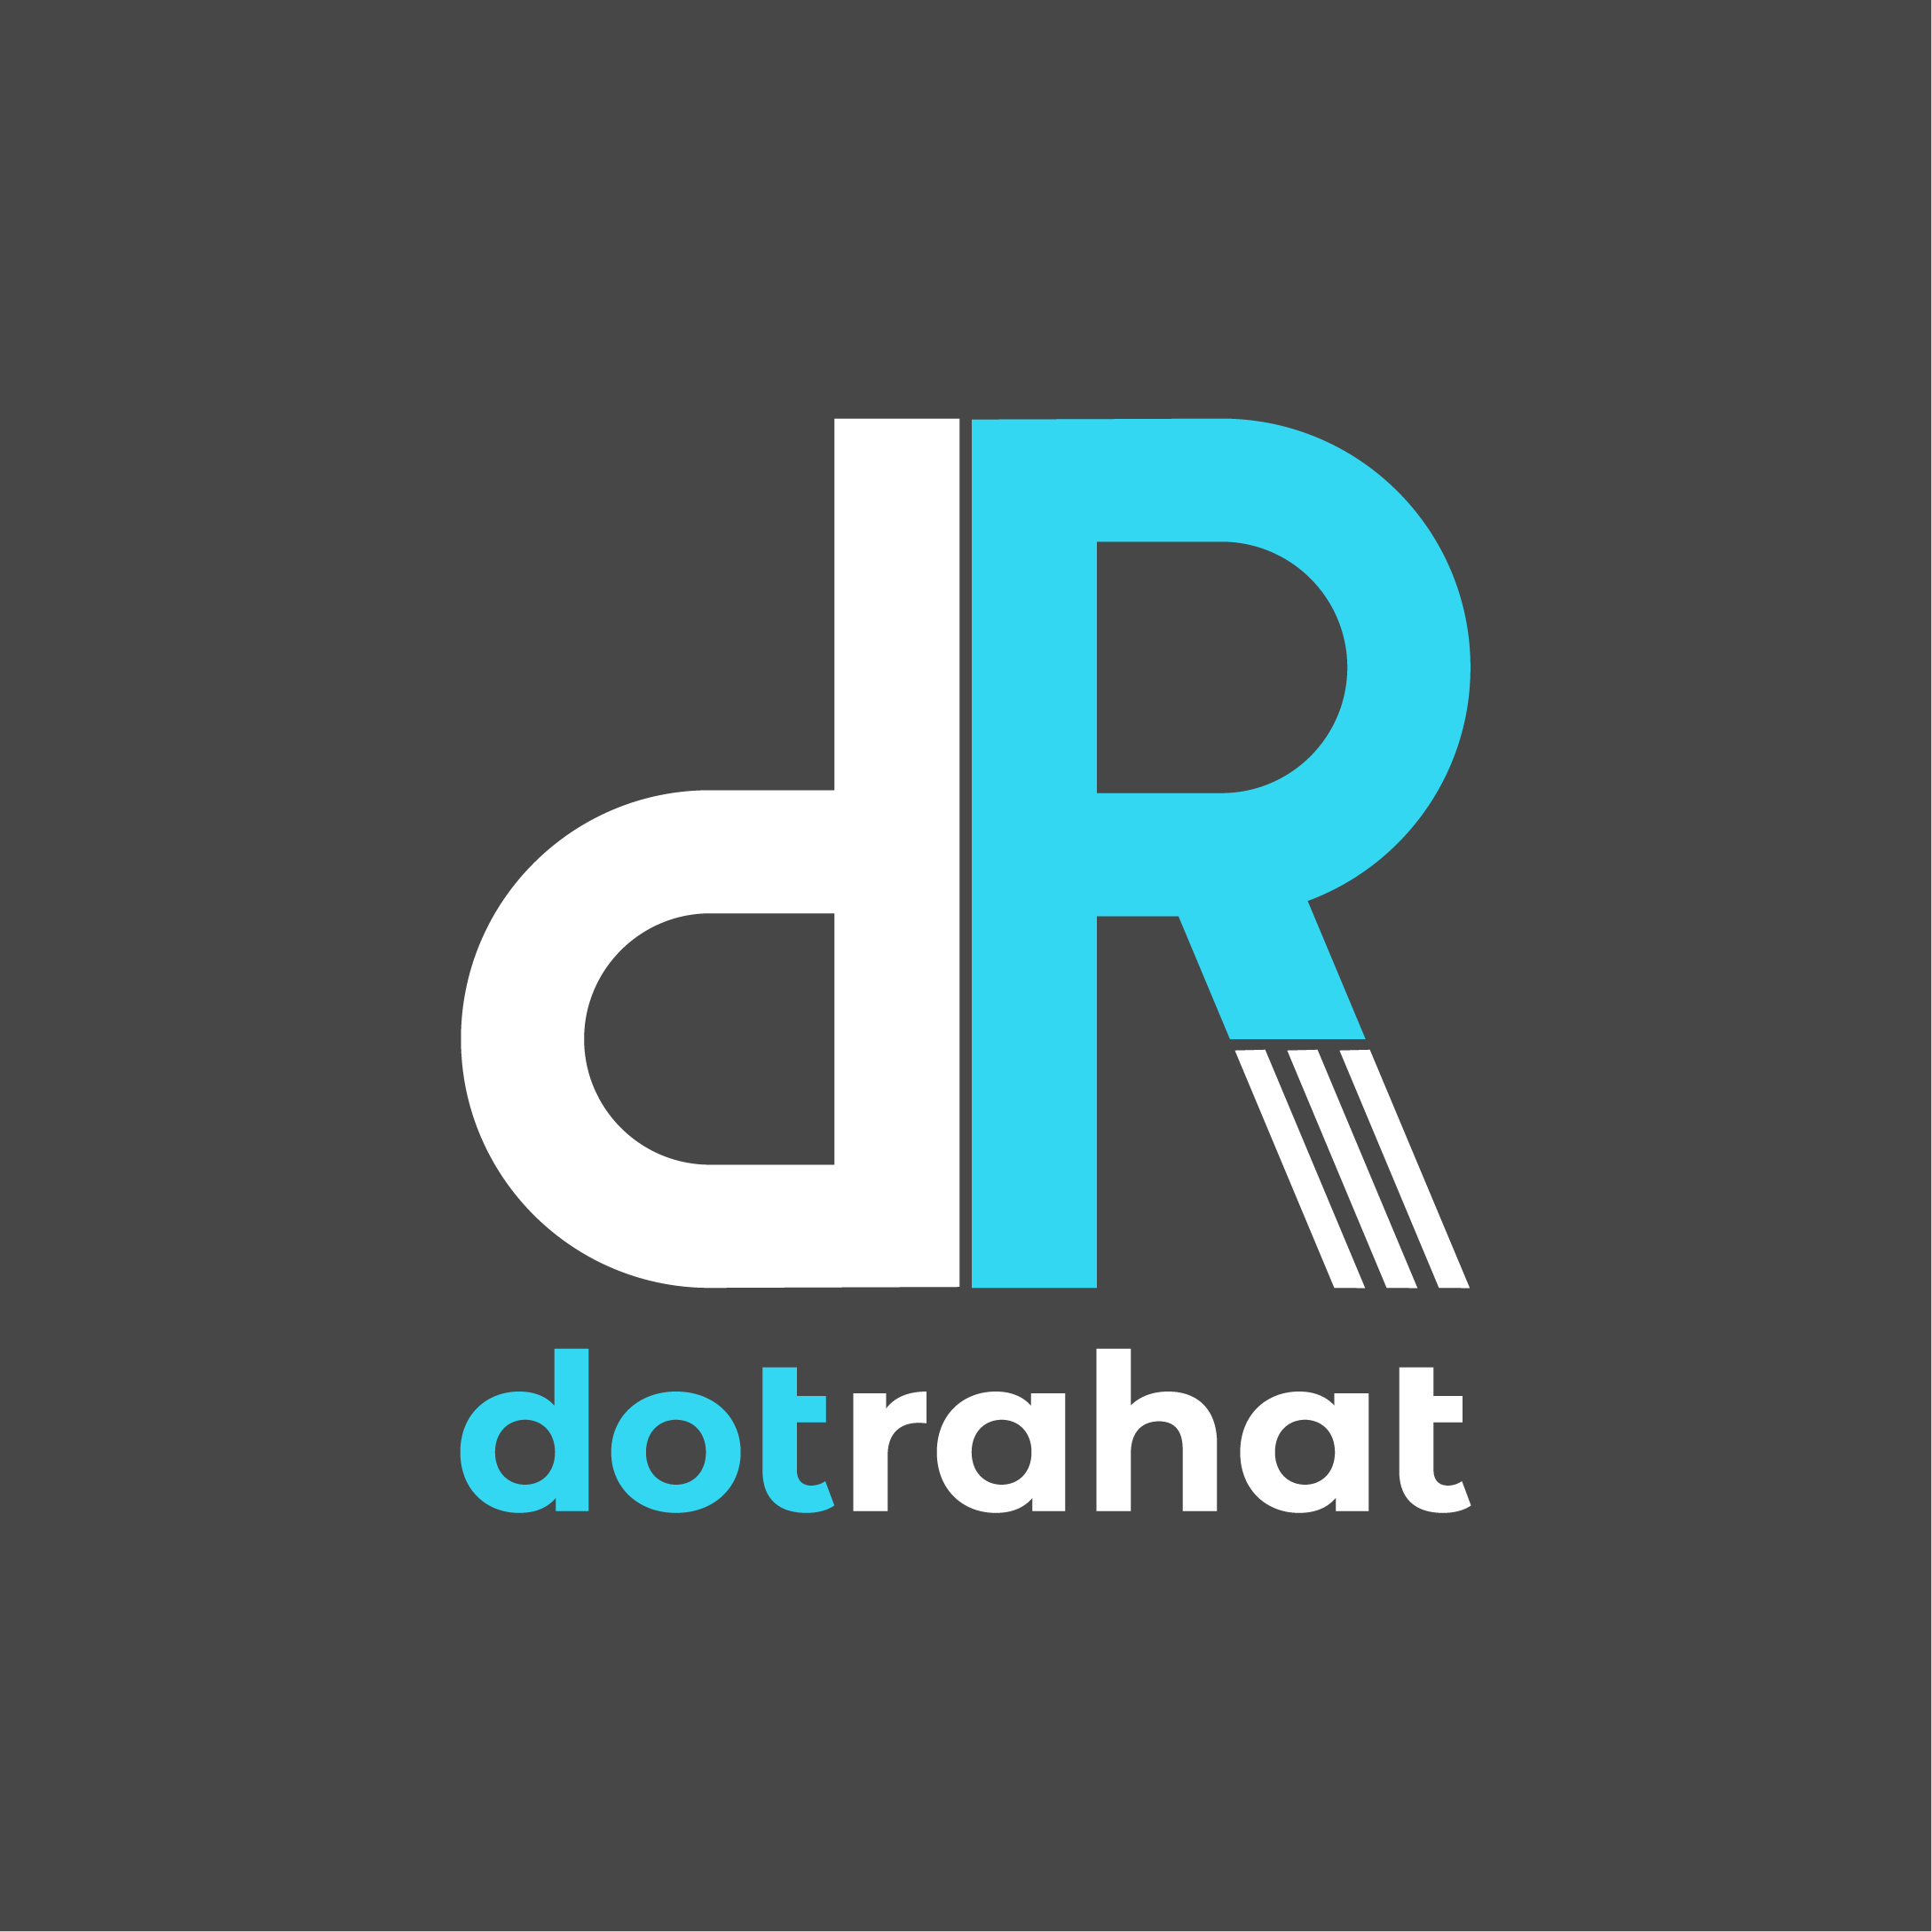 dotrahat logo